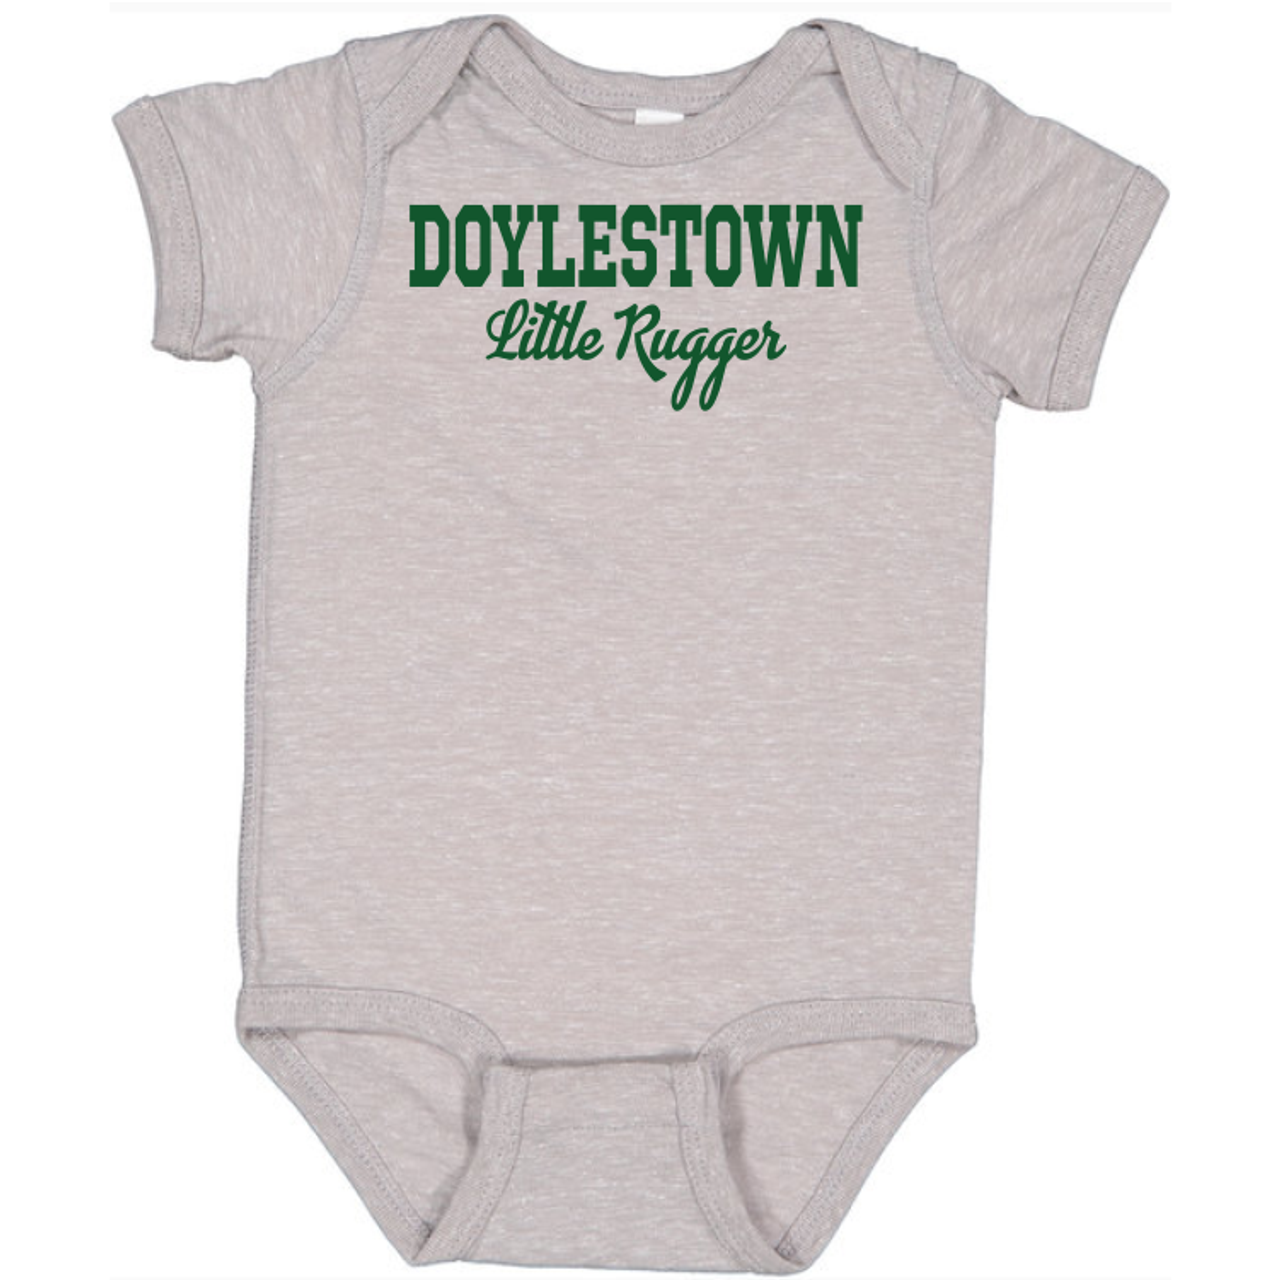 Doylestown Baby Onesie, Gray